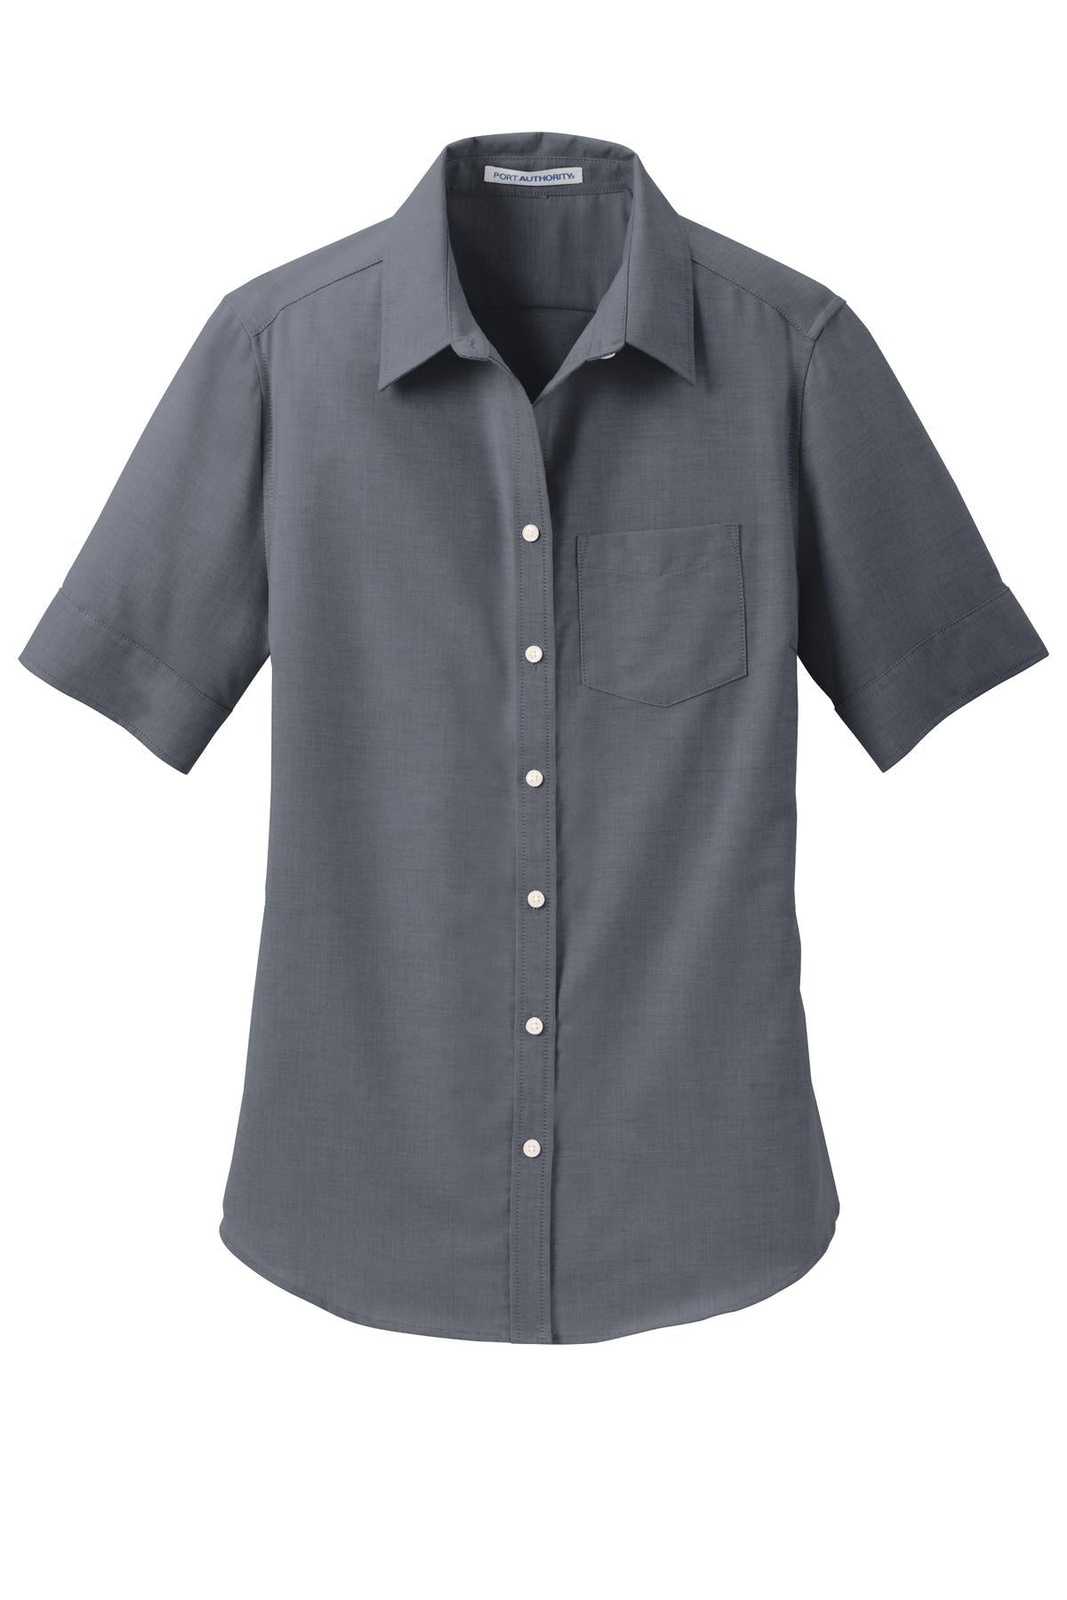 Port Authority L659 Ladies Short Sleeve Superpro Oxford Shirt - Black - HIT a Double - 5